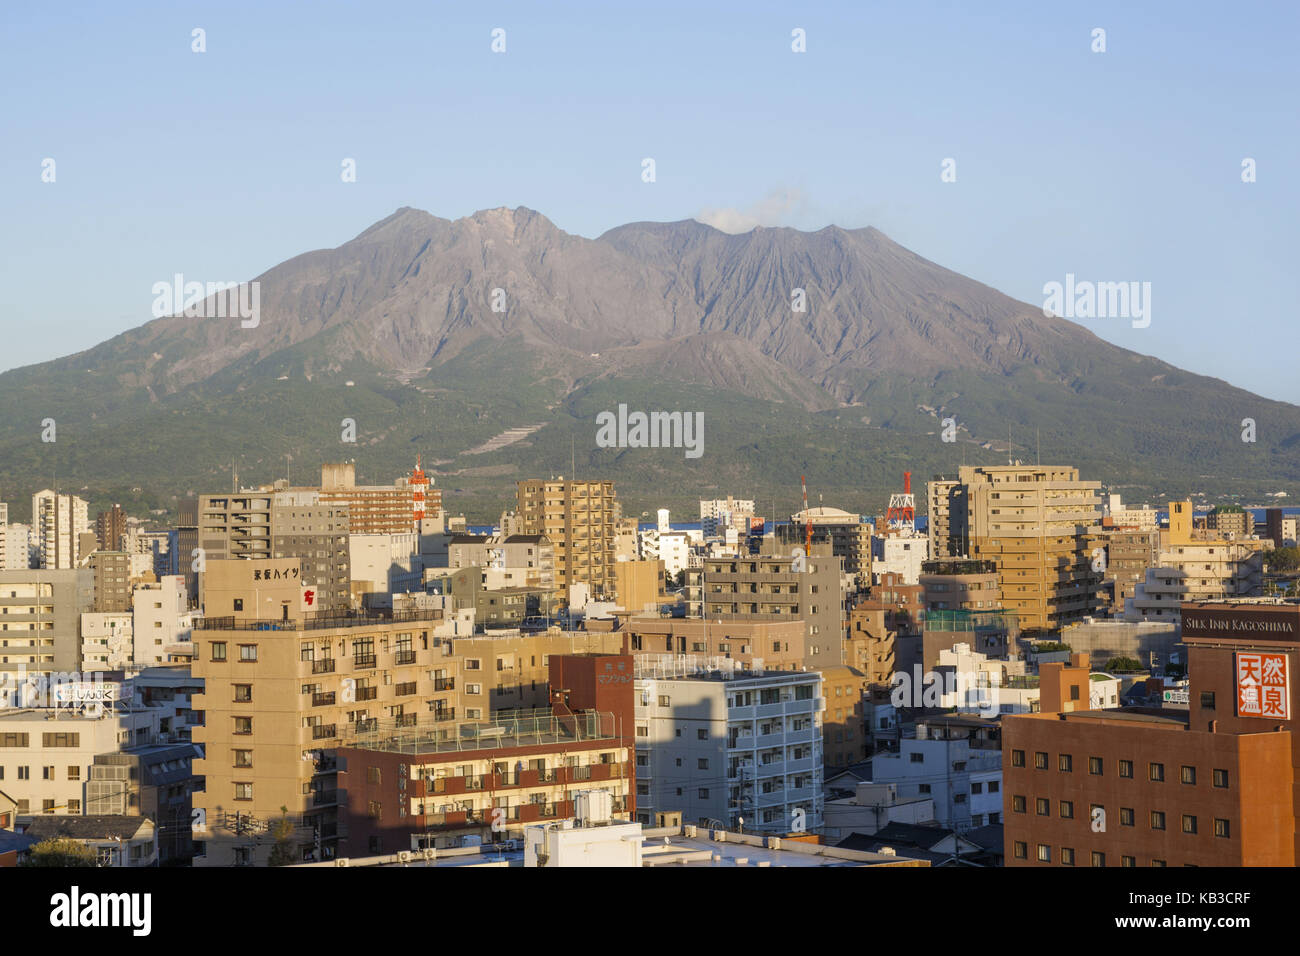 Le Japon, Kagoshima, Kyushu, paysage urbain avec volcan Sakurajima, Banque D'Images